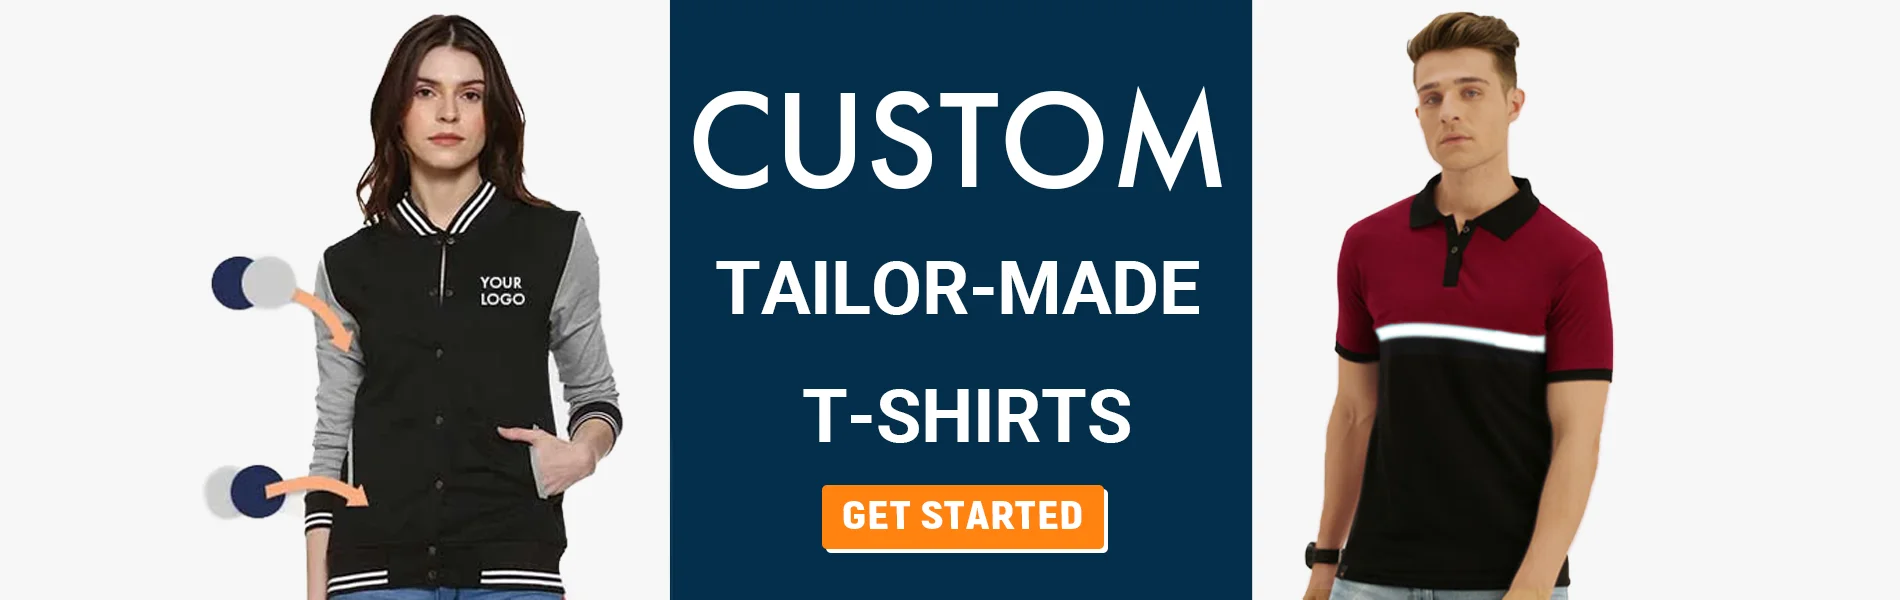 custom tailormade t-shirts ahmedabad